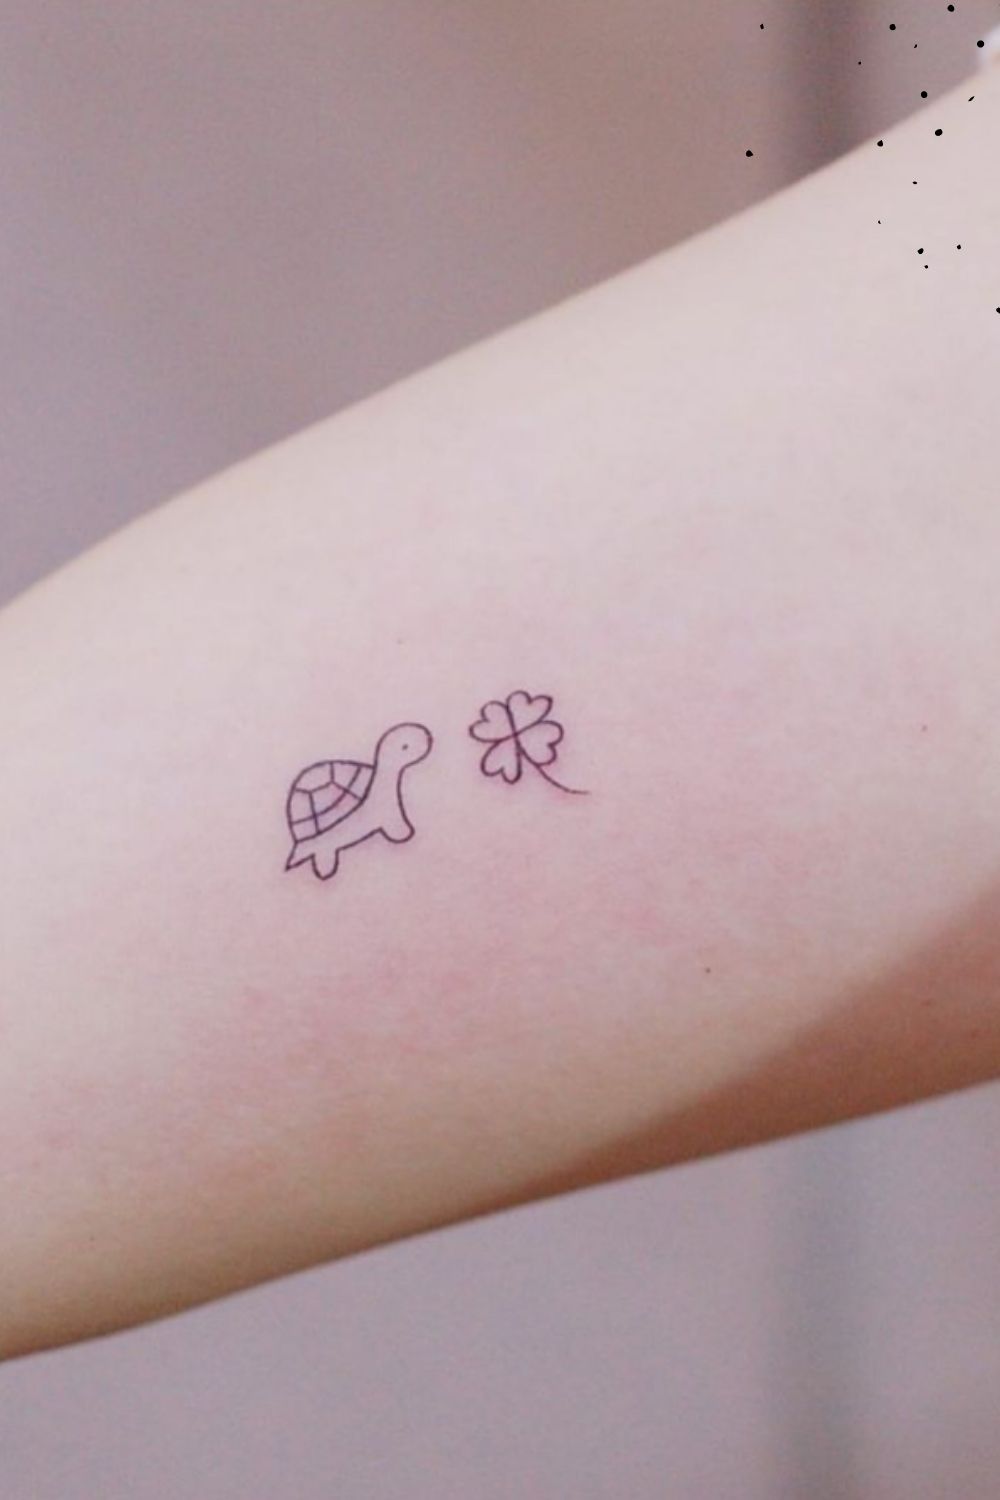 Tortoise tiny tattoo